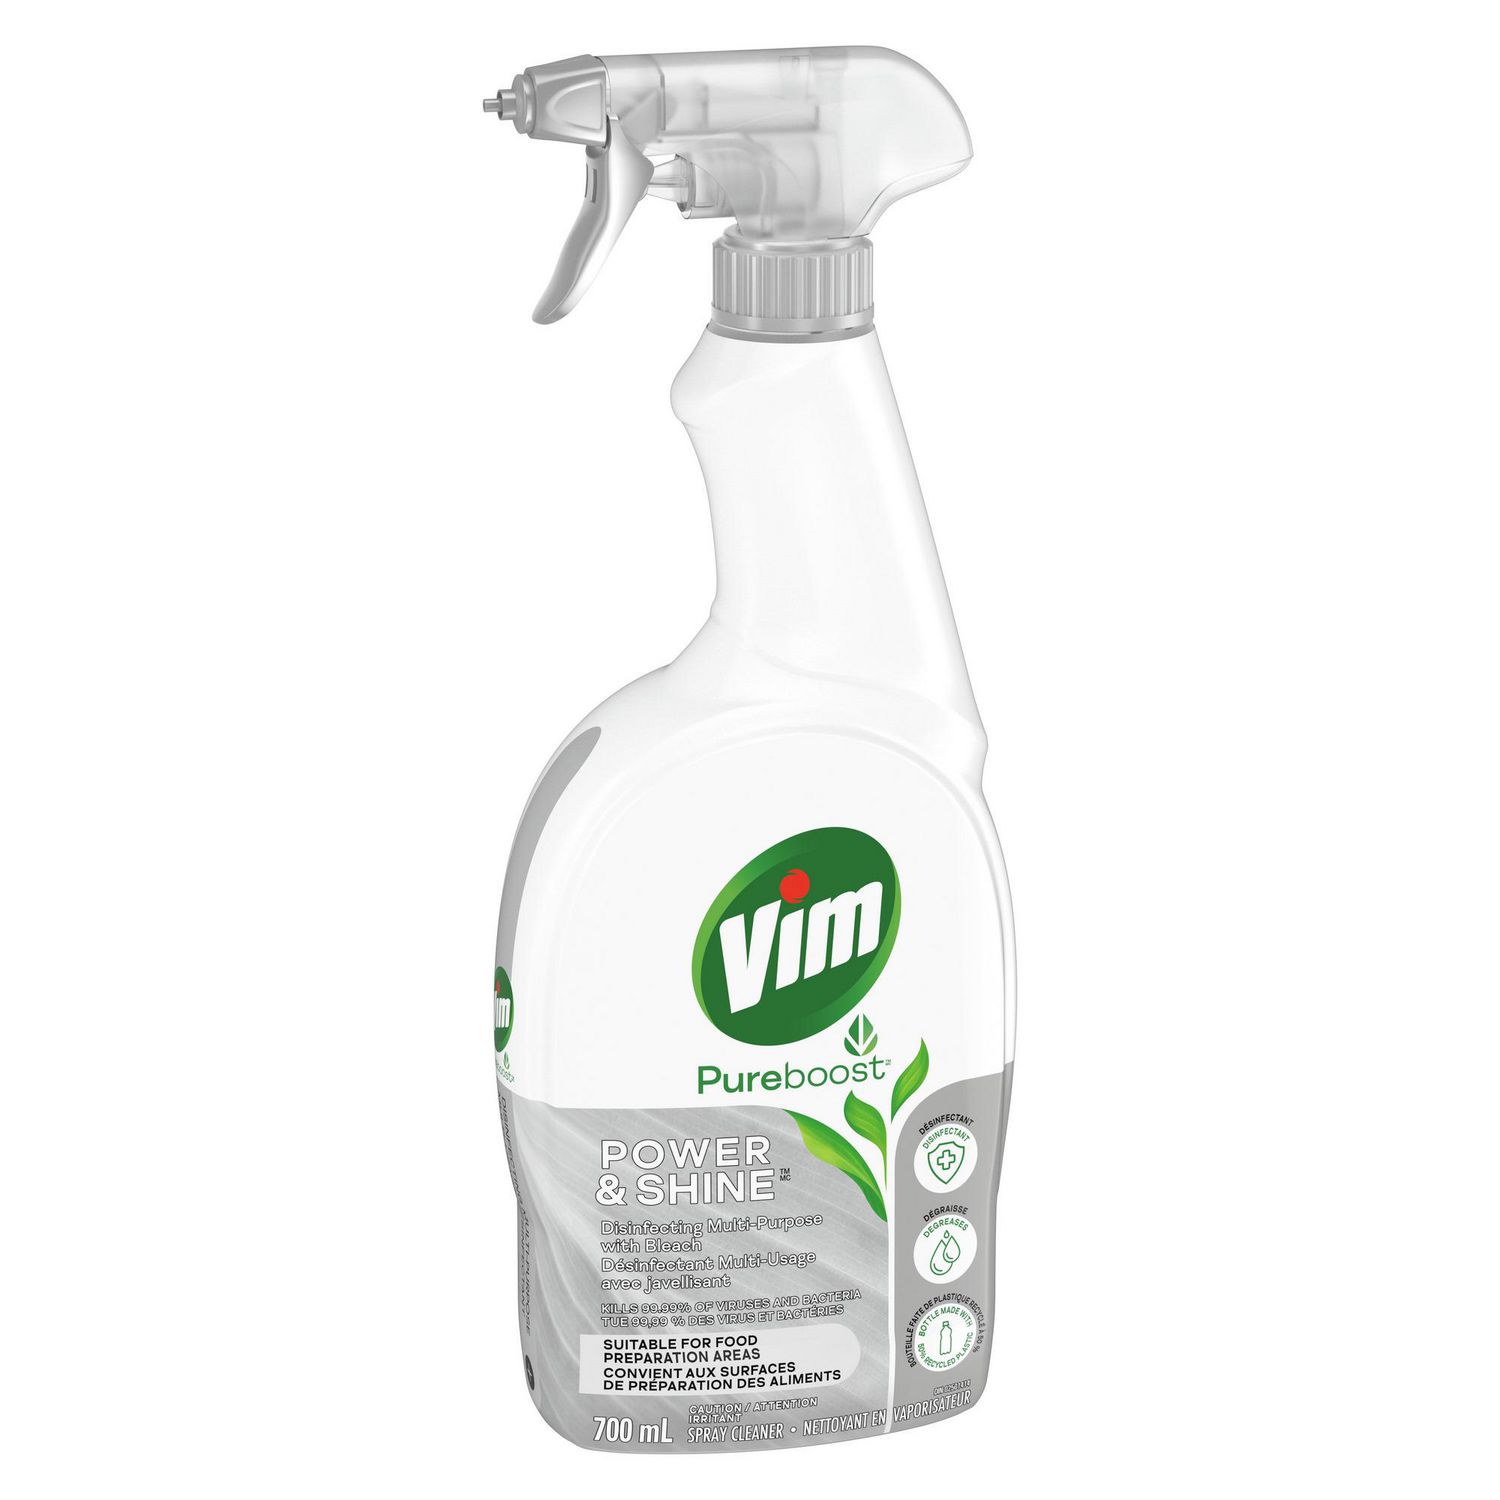 Vim Power & Shine Kitchen Cleaner For Tough Grease & Streak-Free